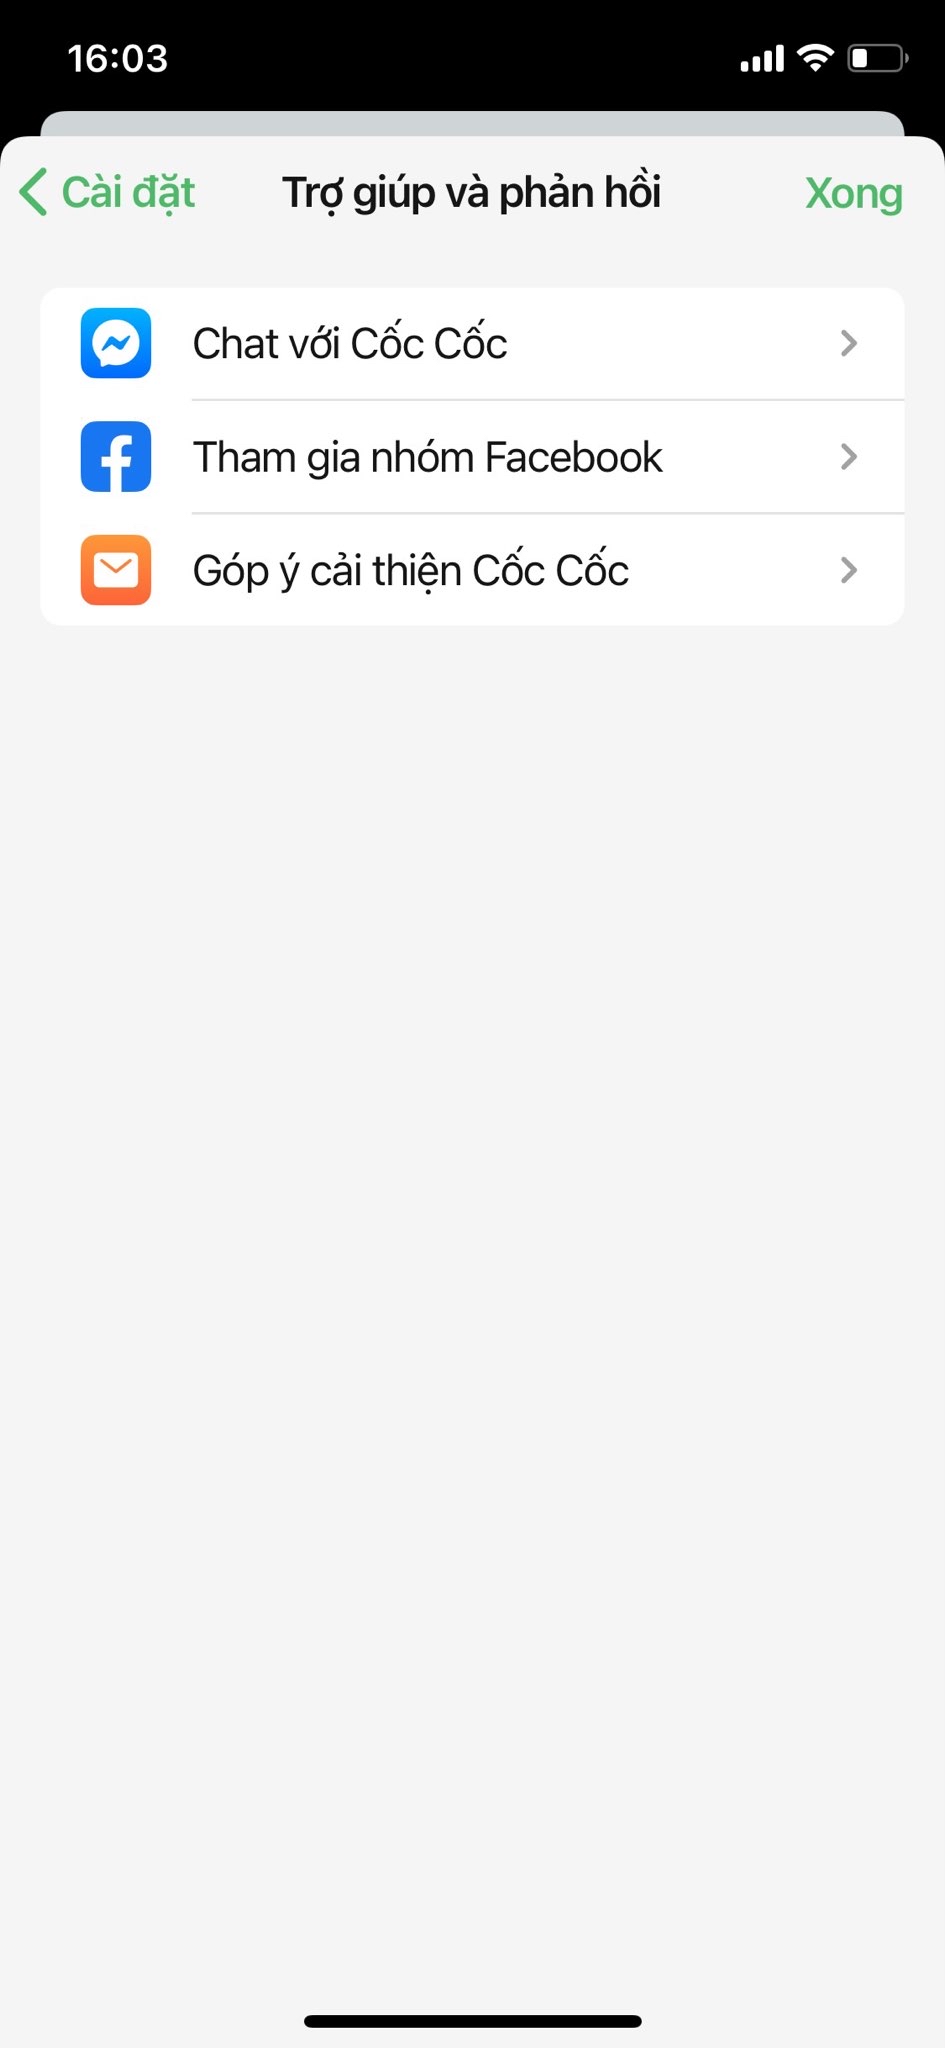 Tinh nang Tro giup va phan hoi trong ung dung Coc Coc Mobile